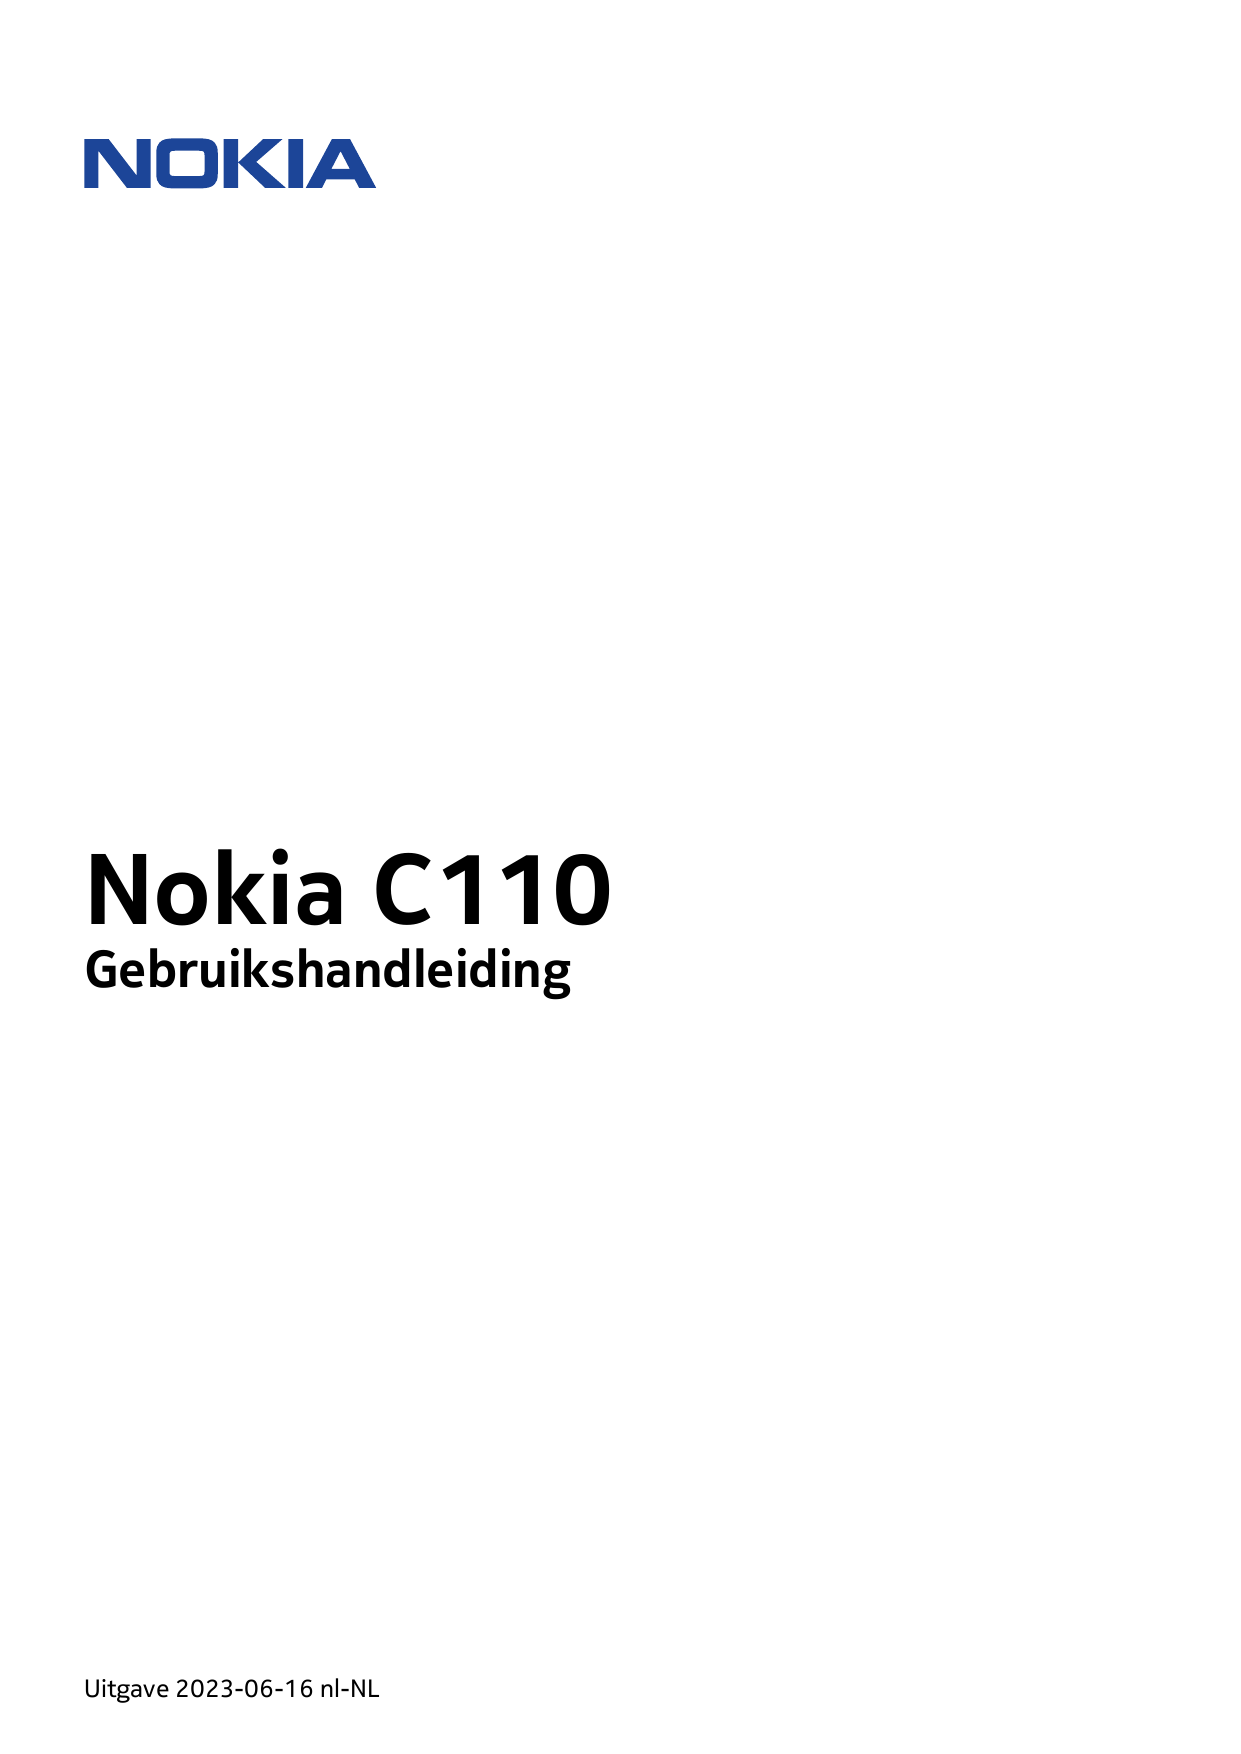 Nokia C110GebruikshandleidingUitgave 2023-06-16 nl-NL